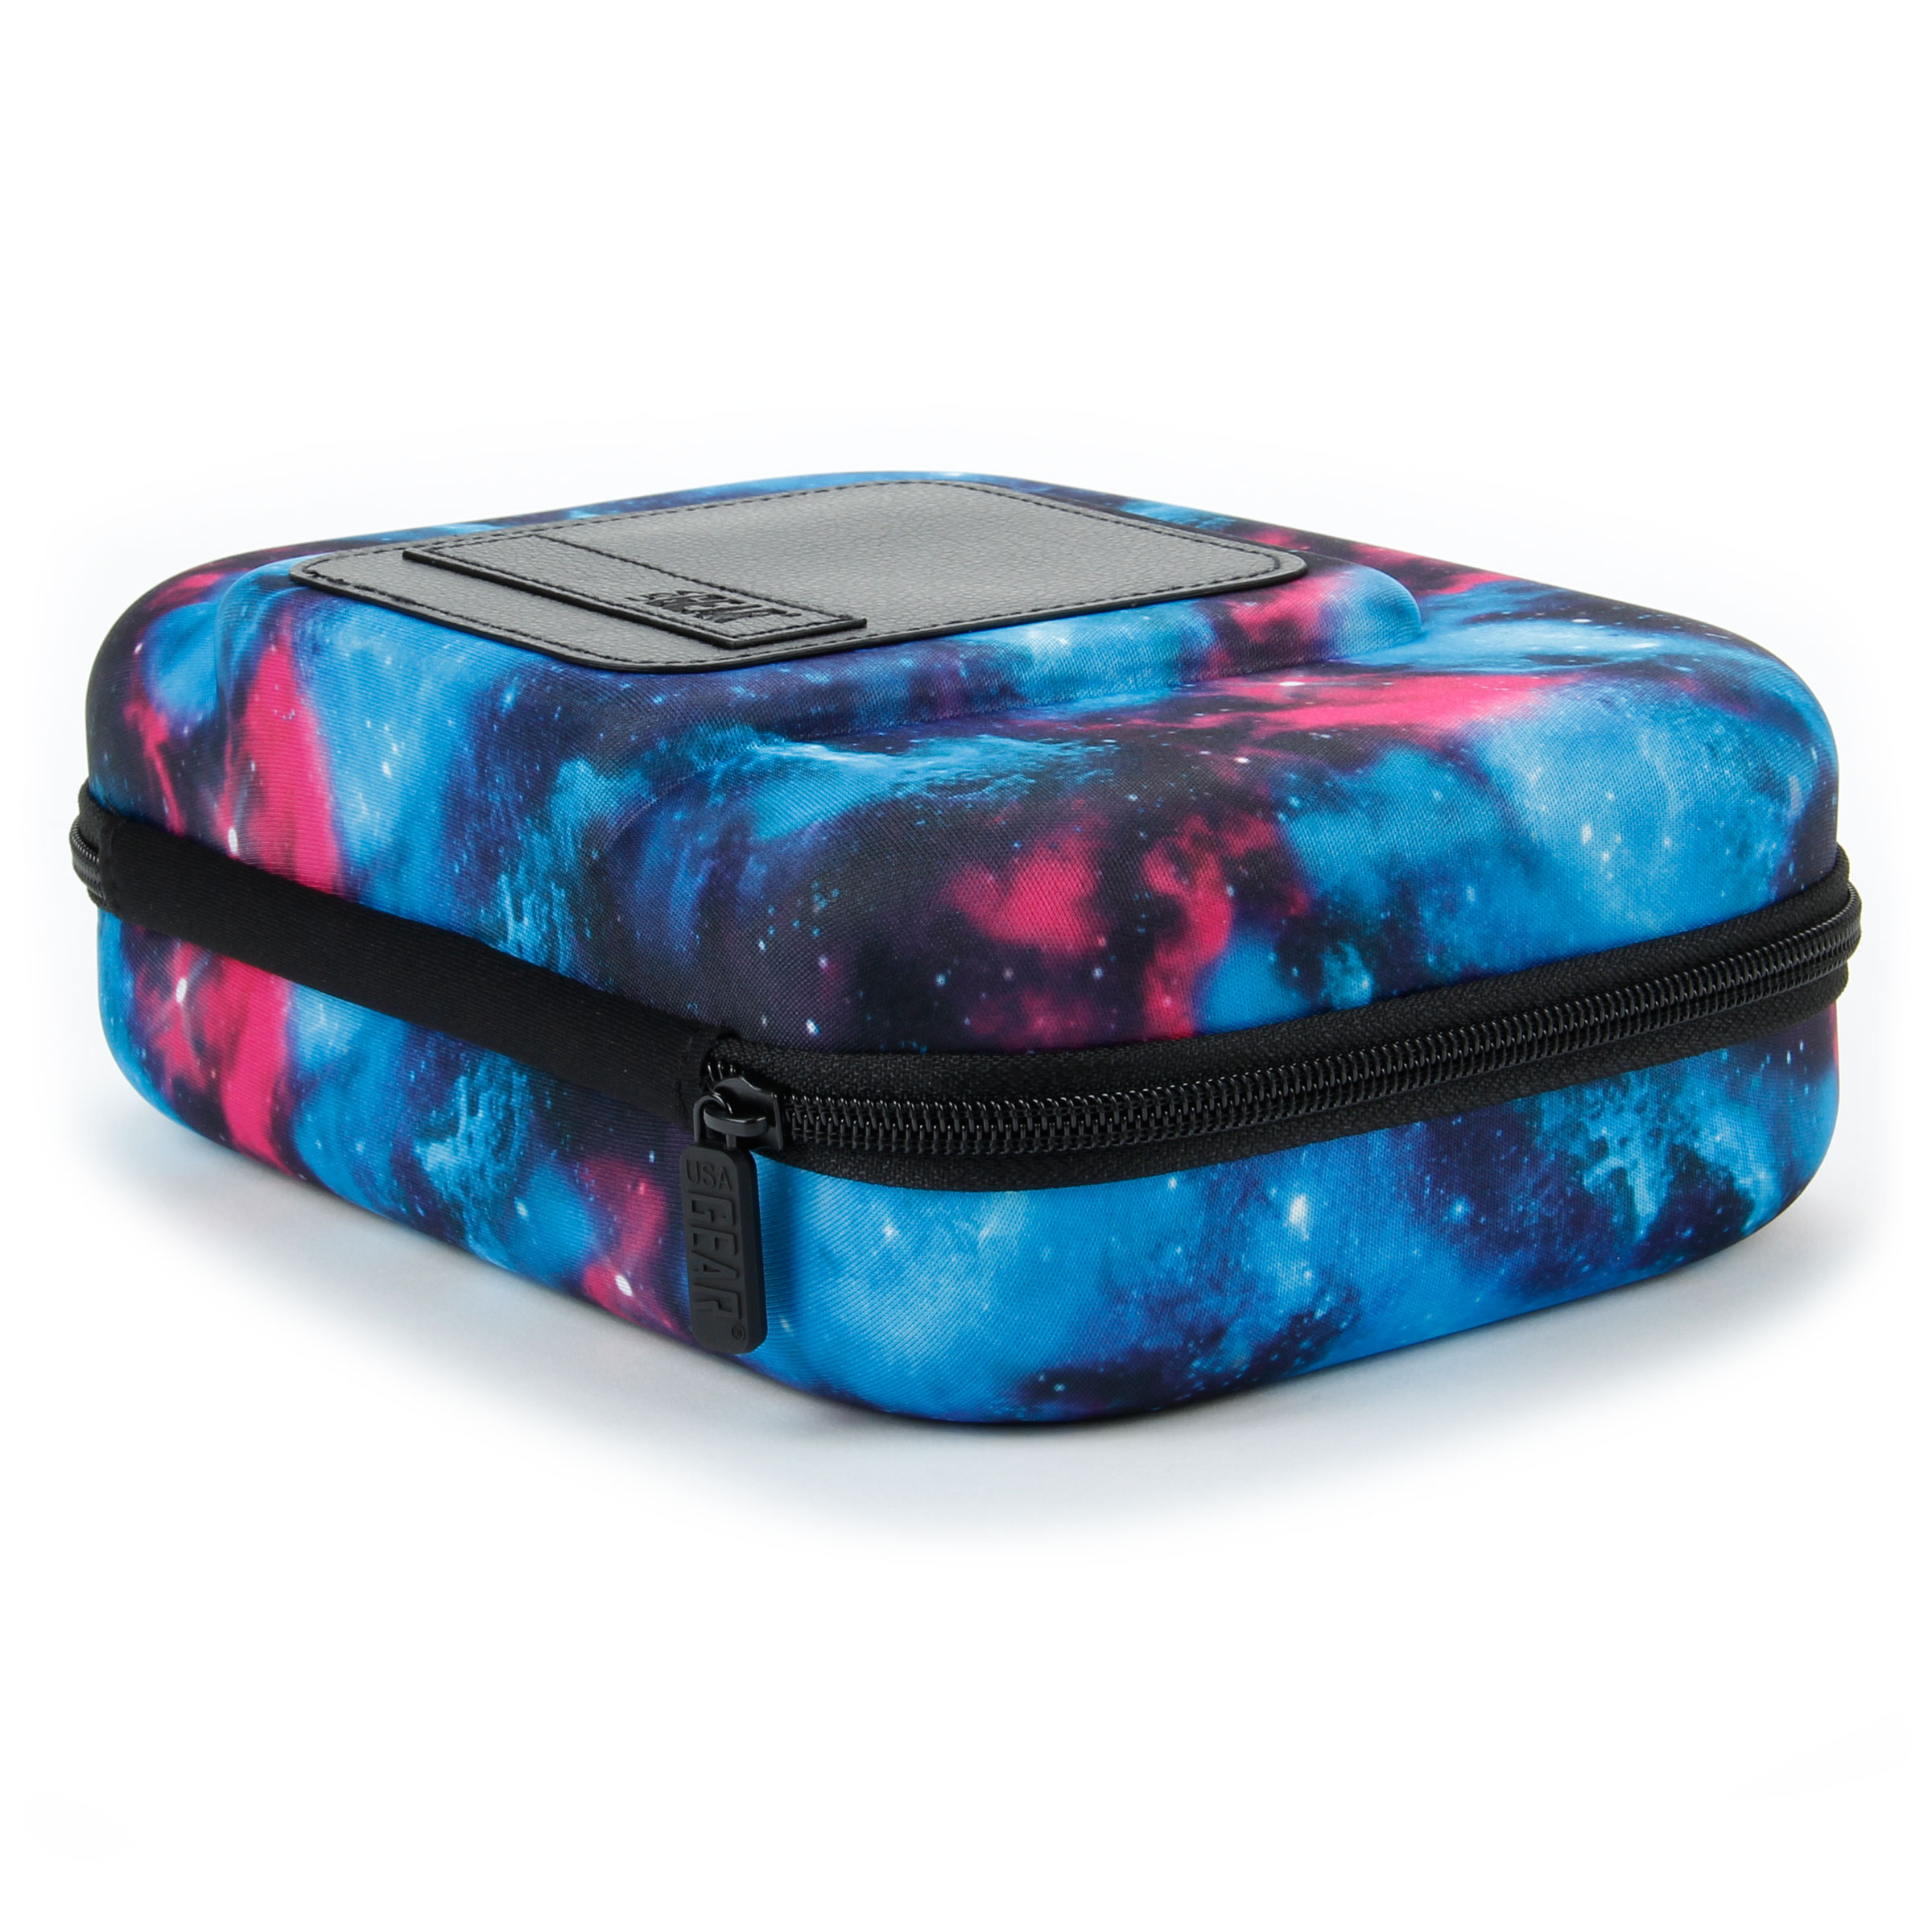 USA GEAR Toiletry Travel Bag Organizer, Customizable Storage Pockets, Nylon Hard Shell - Galaxy - image 4 of 8